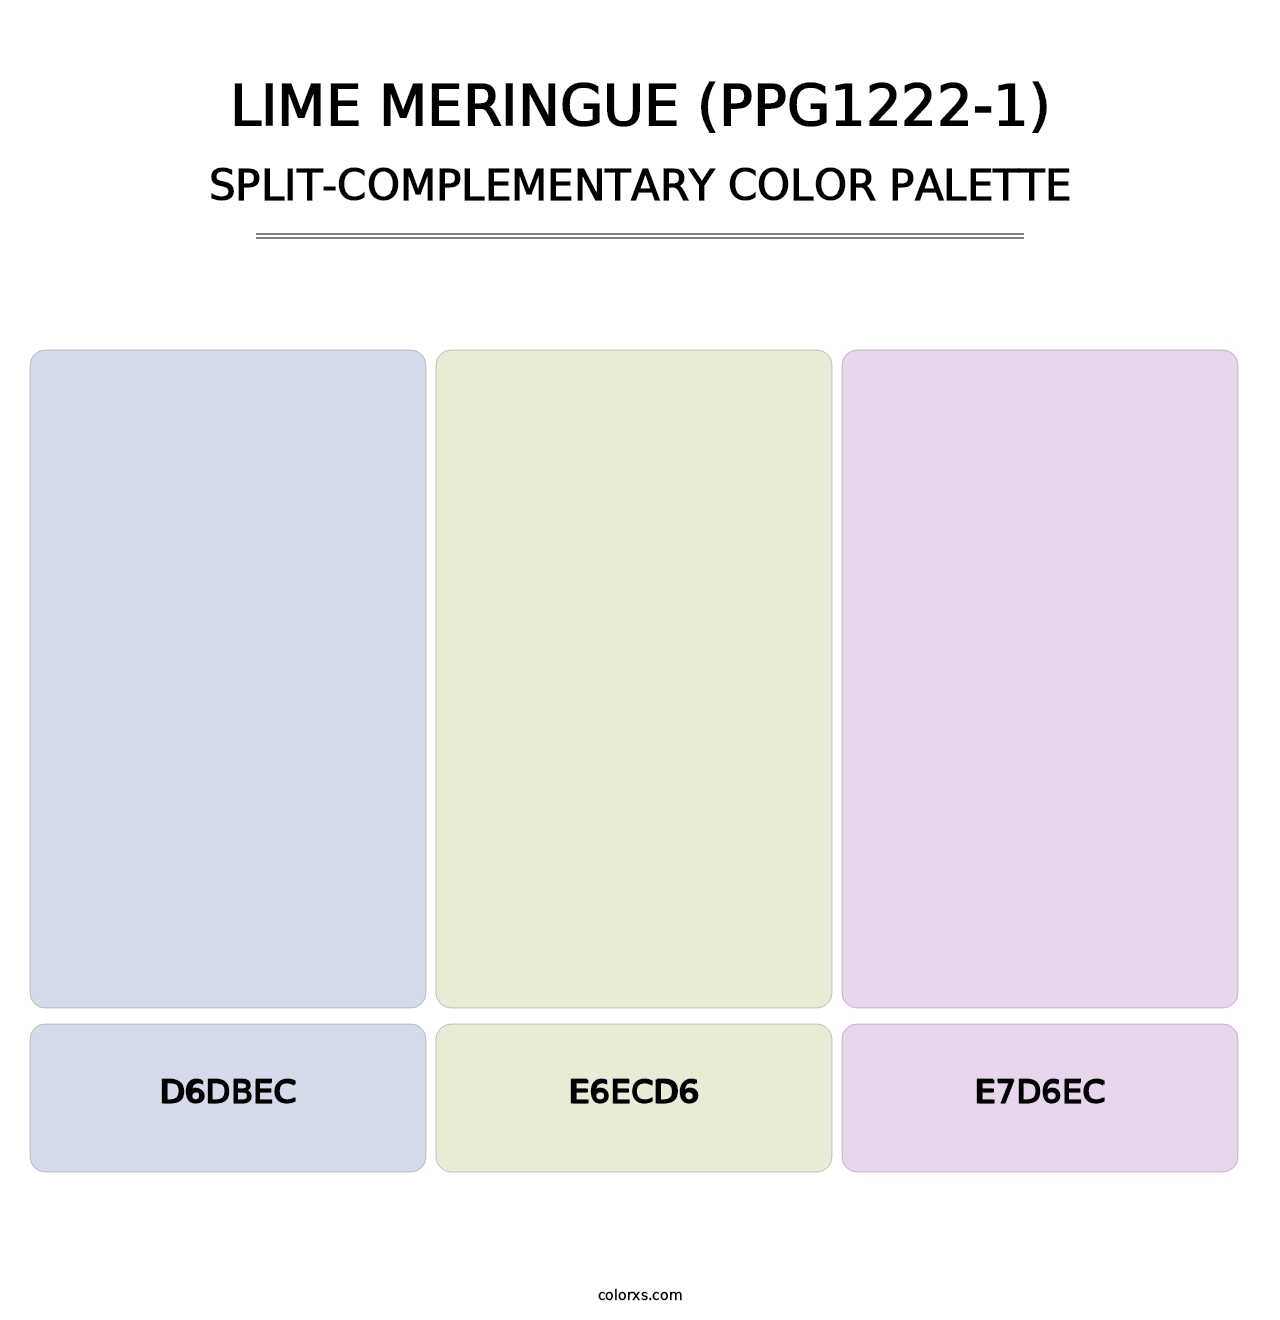 Lime Meringue (PPG1222-1) - Split-Complementary Color Palette